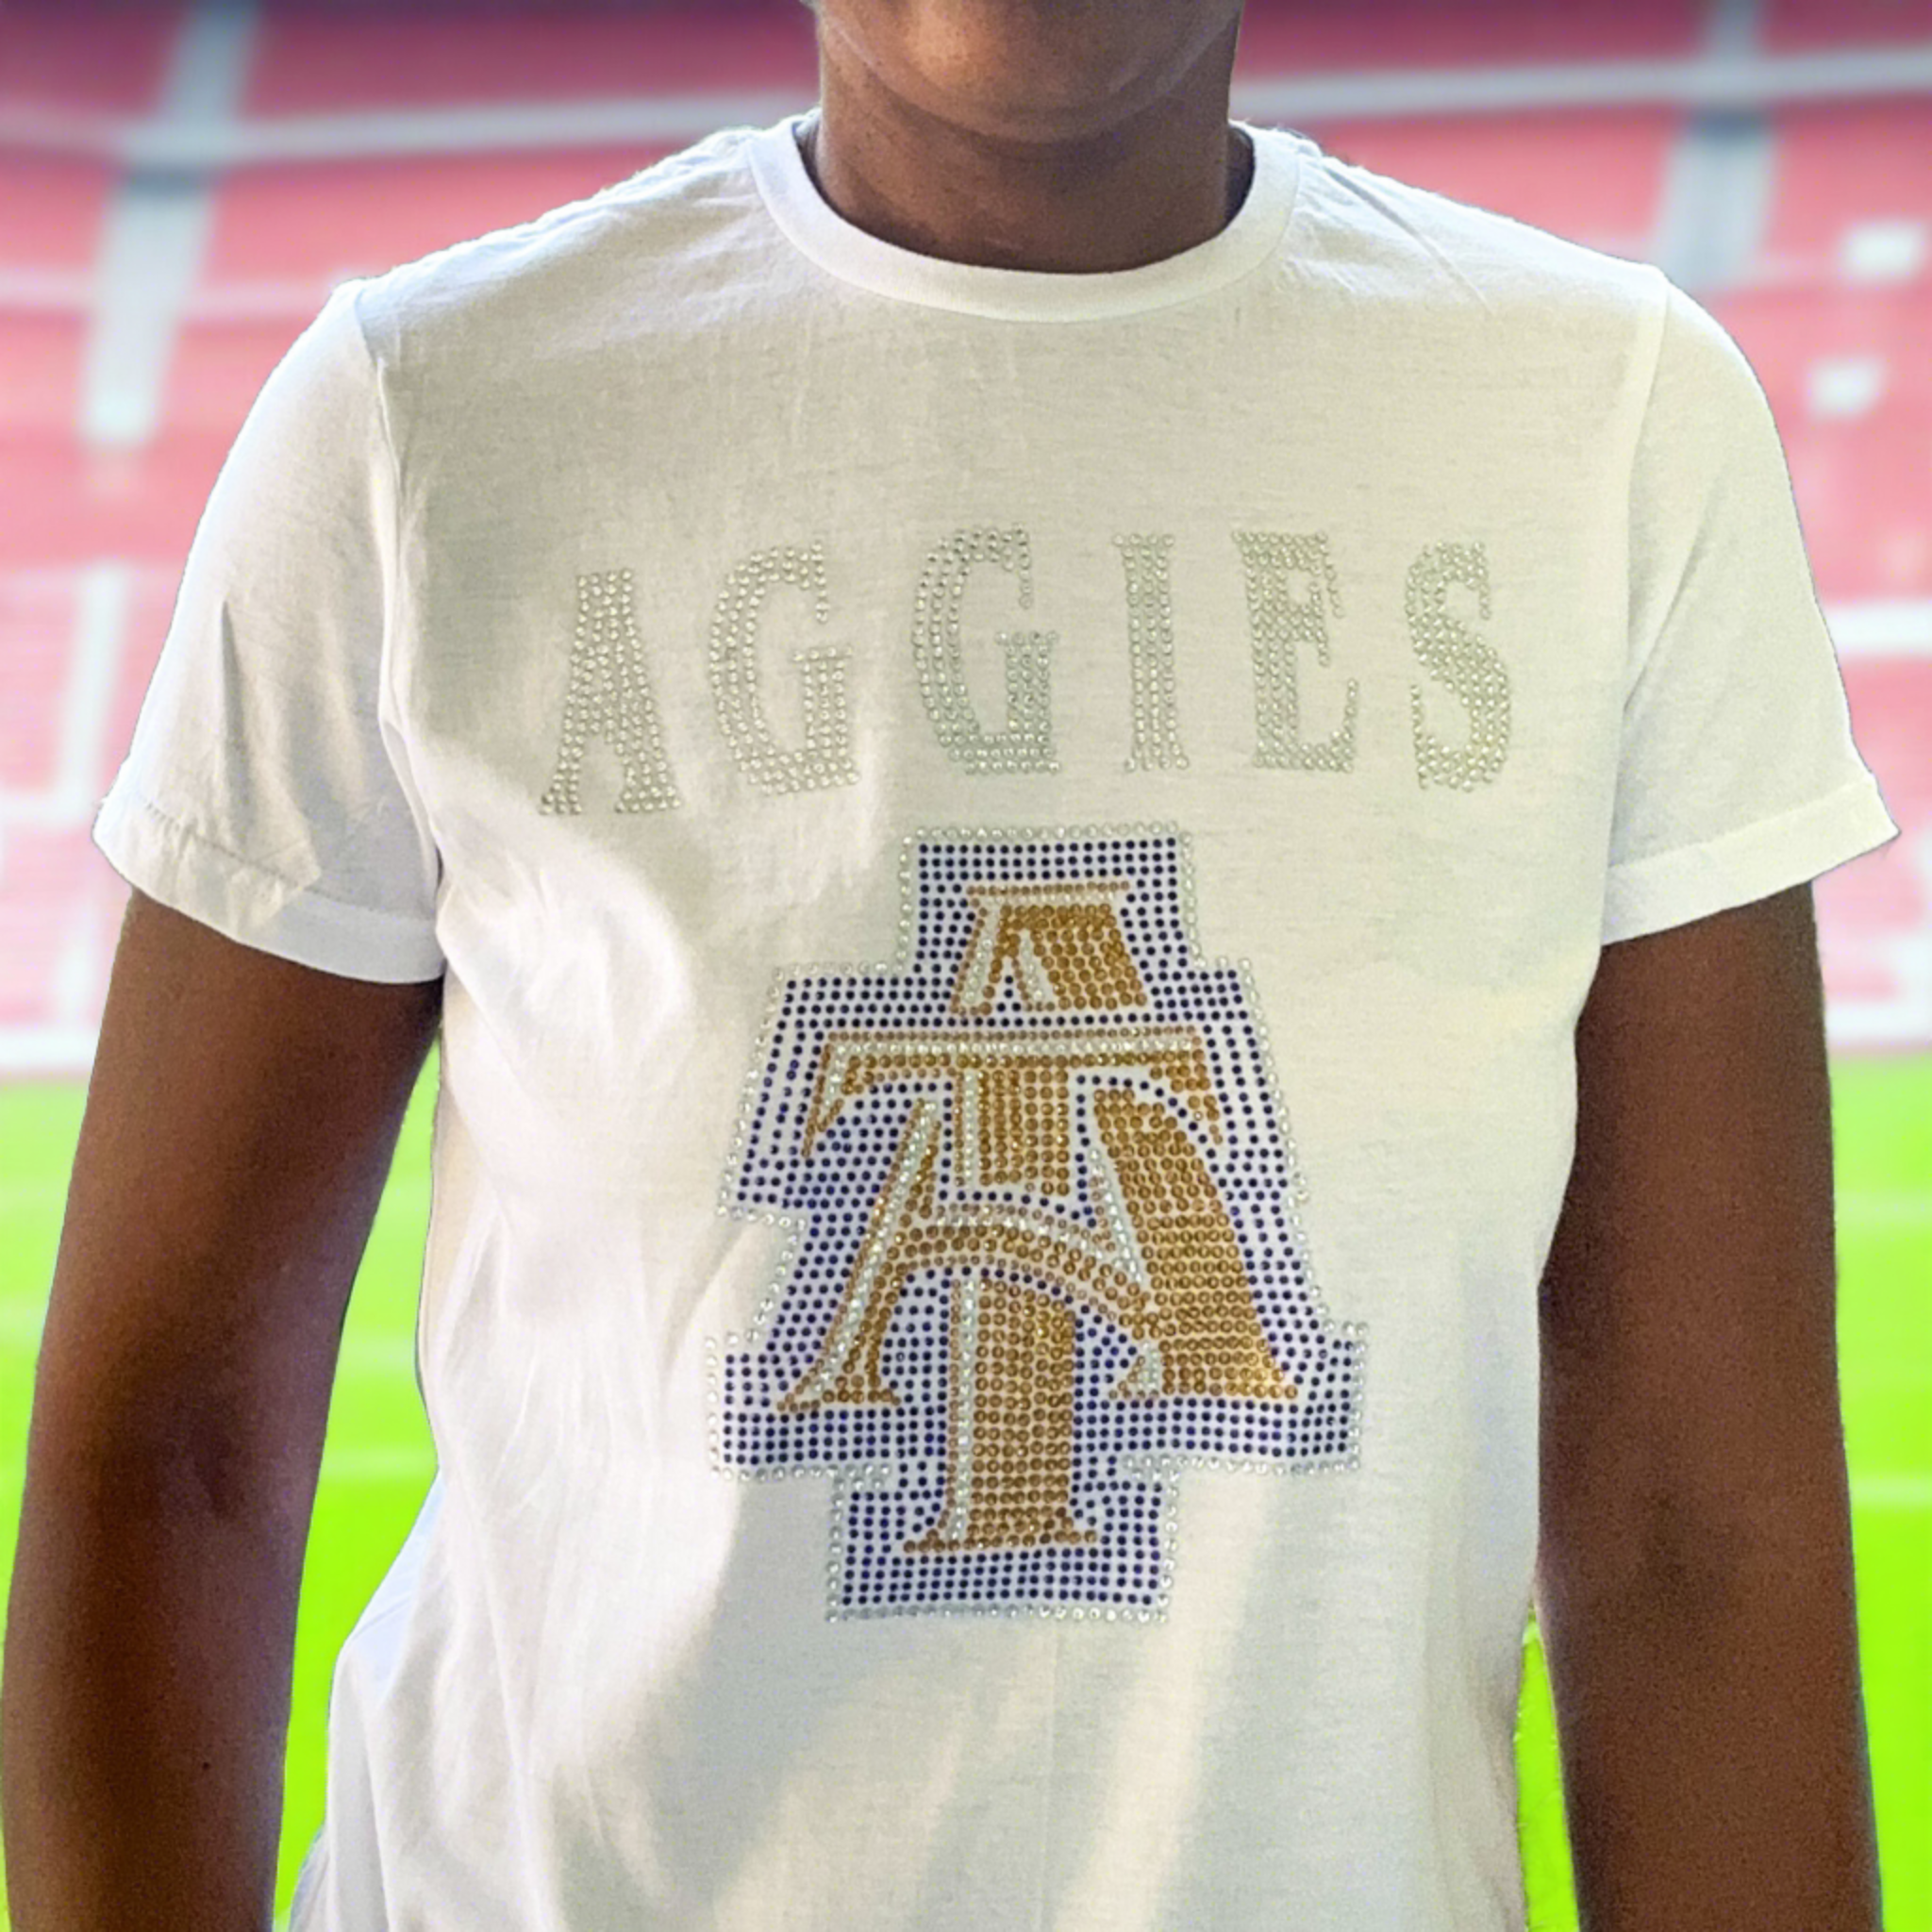 Aggies A&T Bling T-shirt